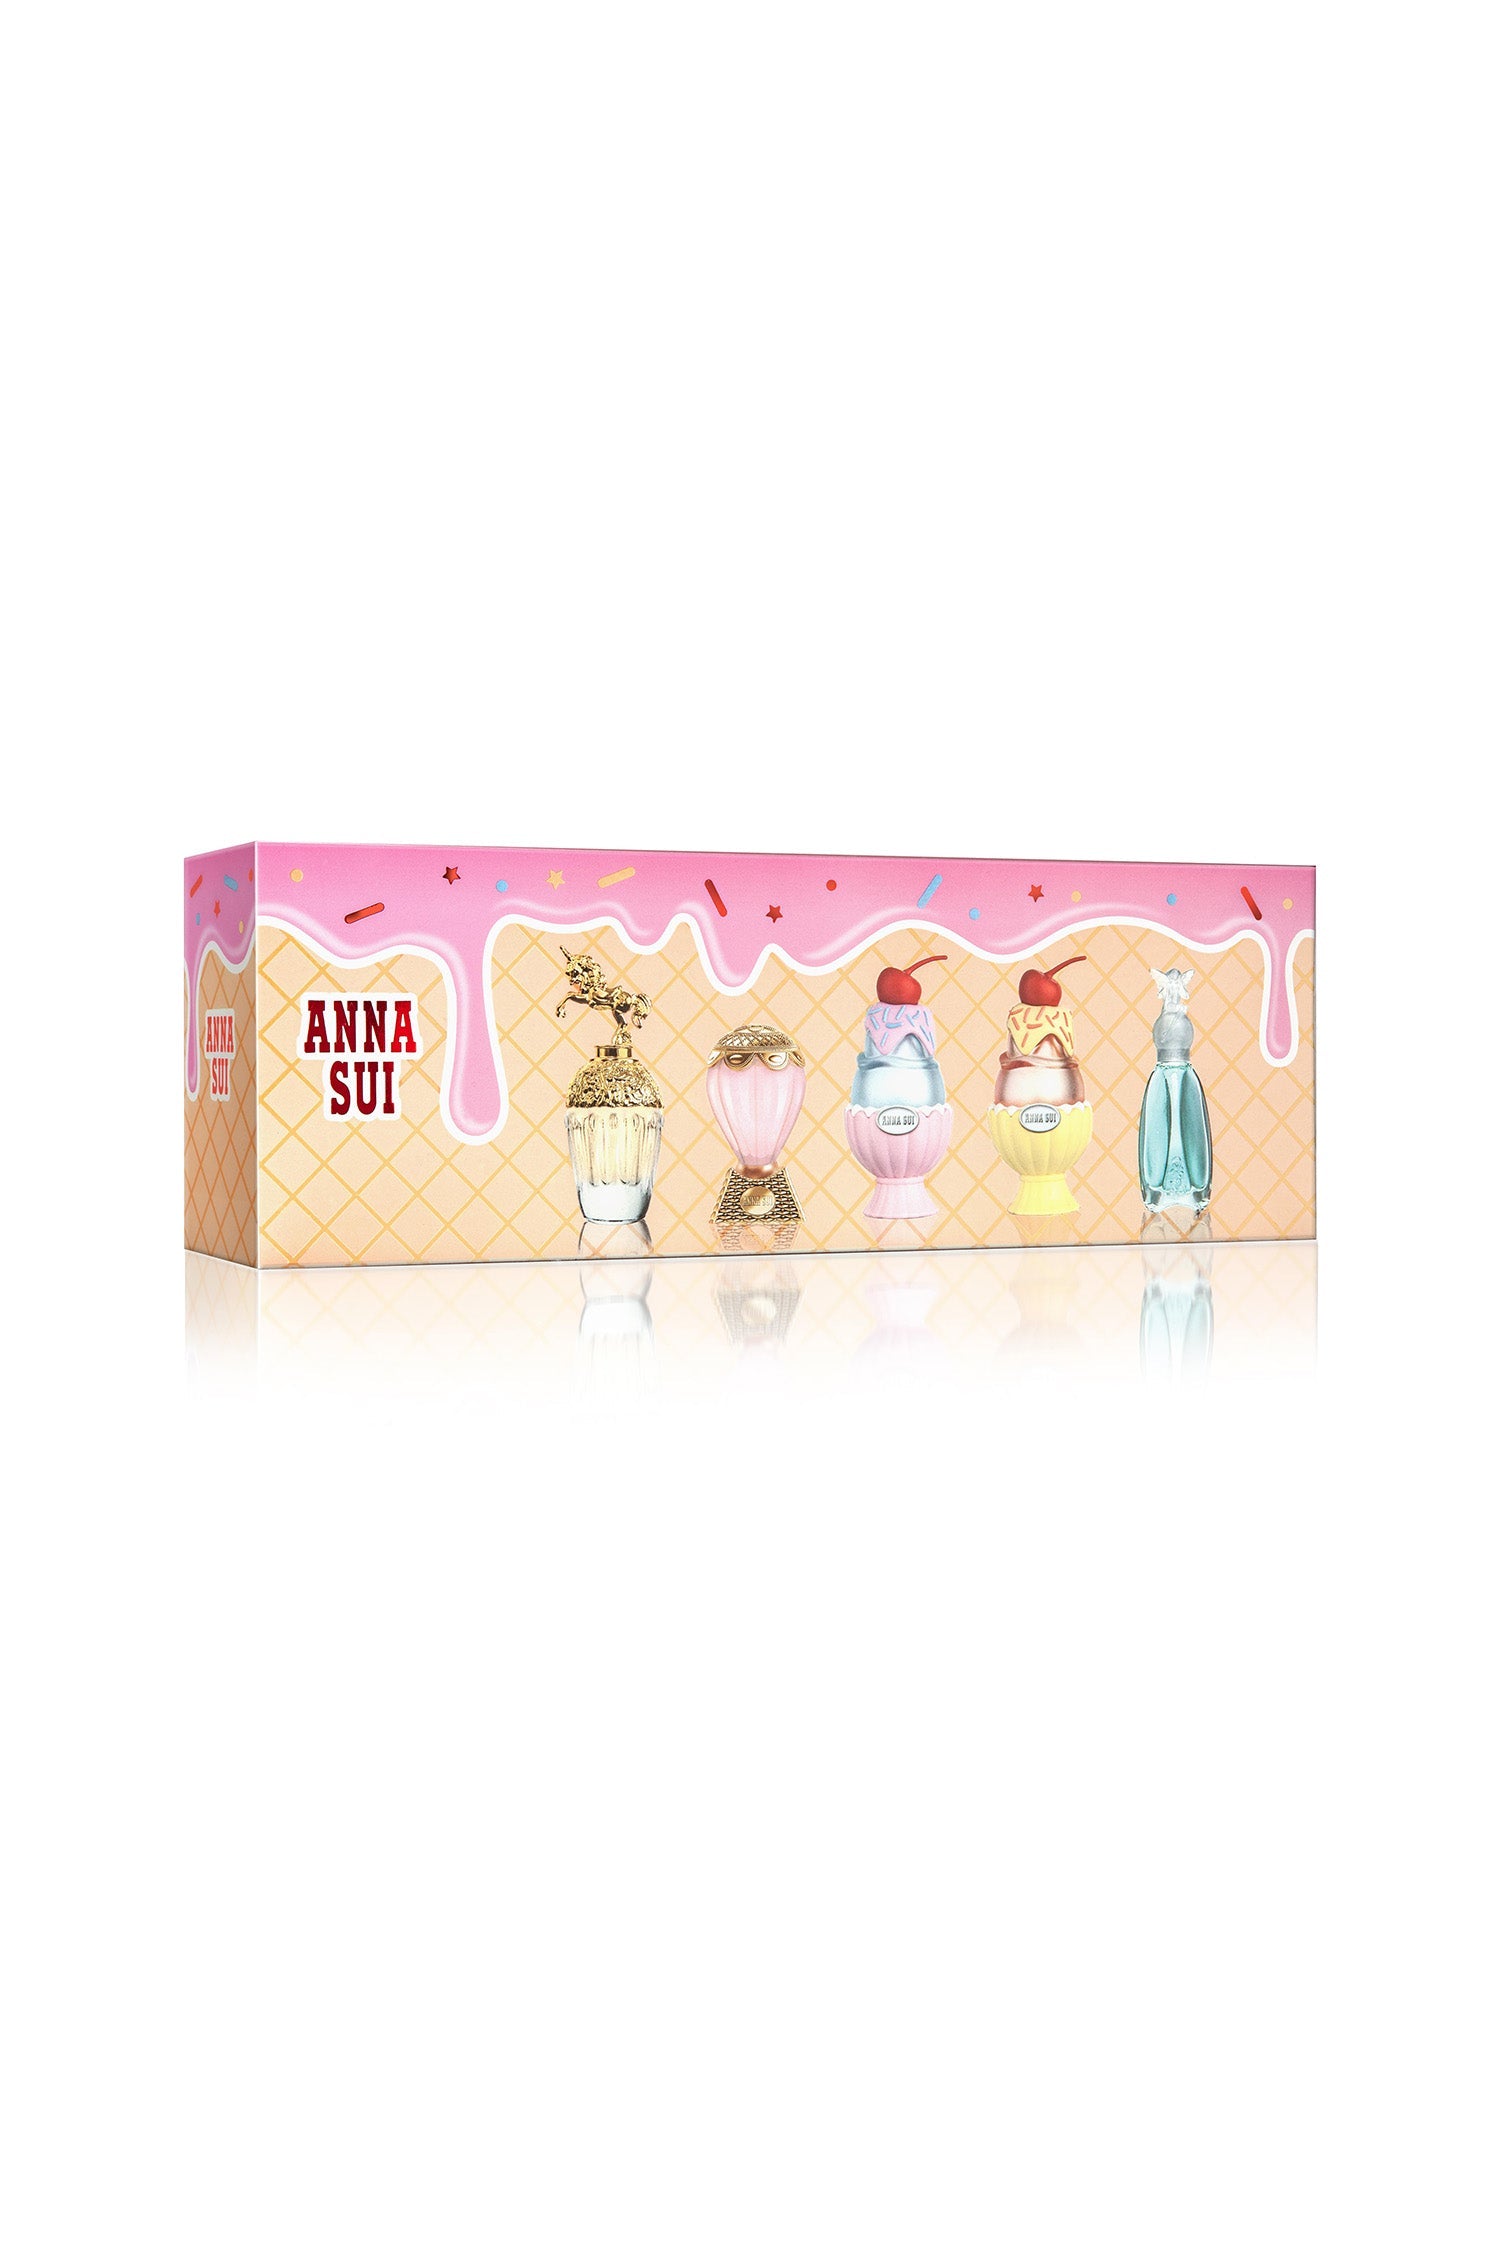 Box design: Fantasia, Sky, Sundae Pretty Pink, Sundae Yellow Mellow, Secret Wish, miniatures of 5ml